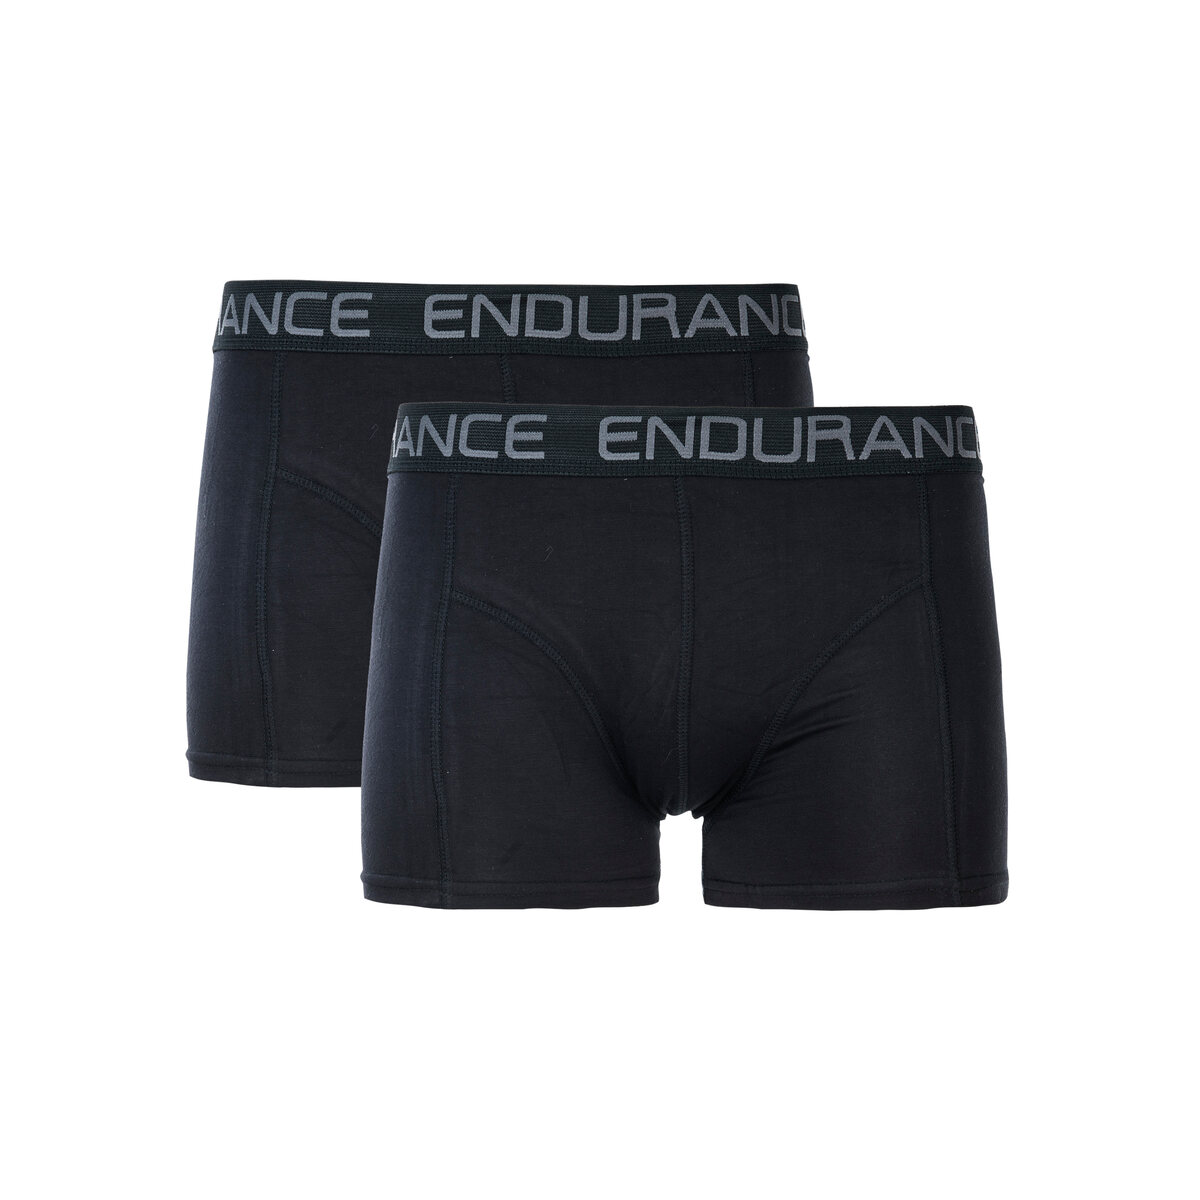 Underwear -  endurance Brighton M Bamboo Boxer 2-pack